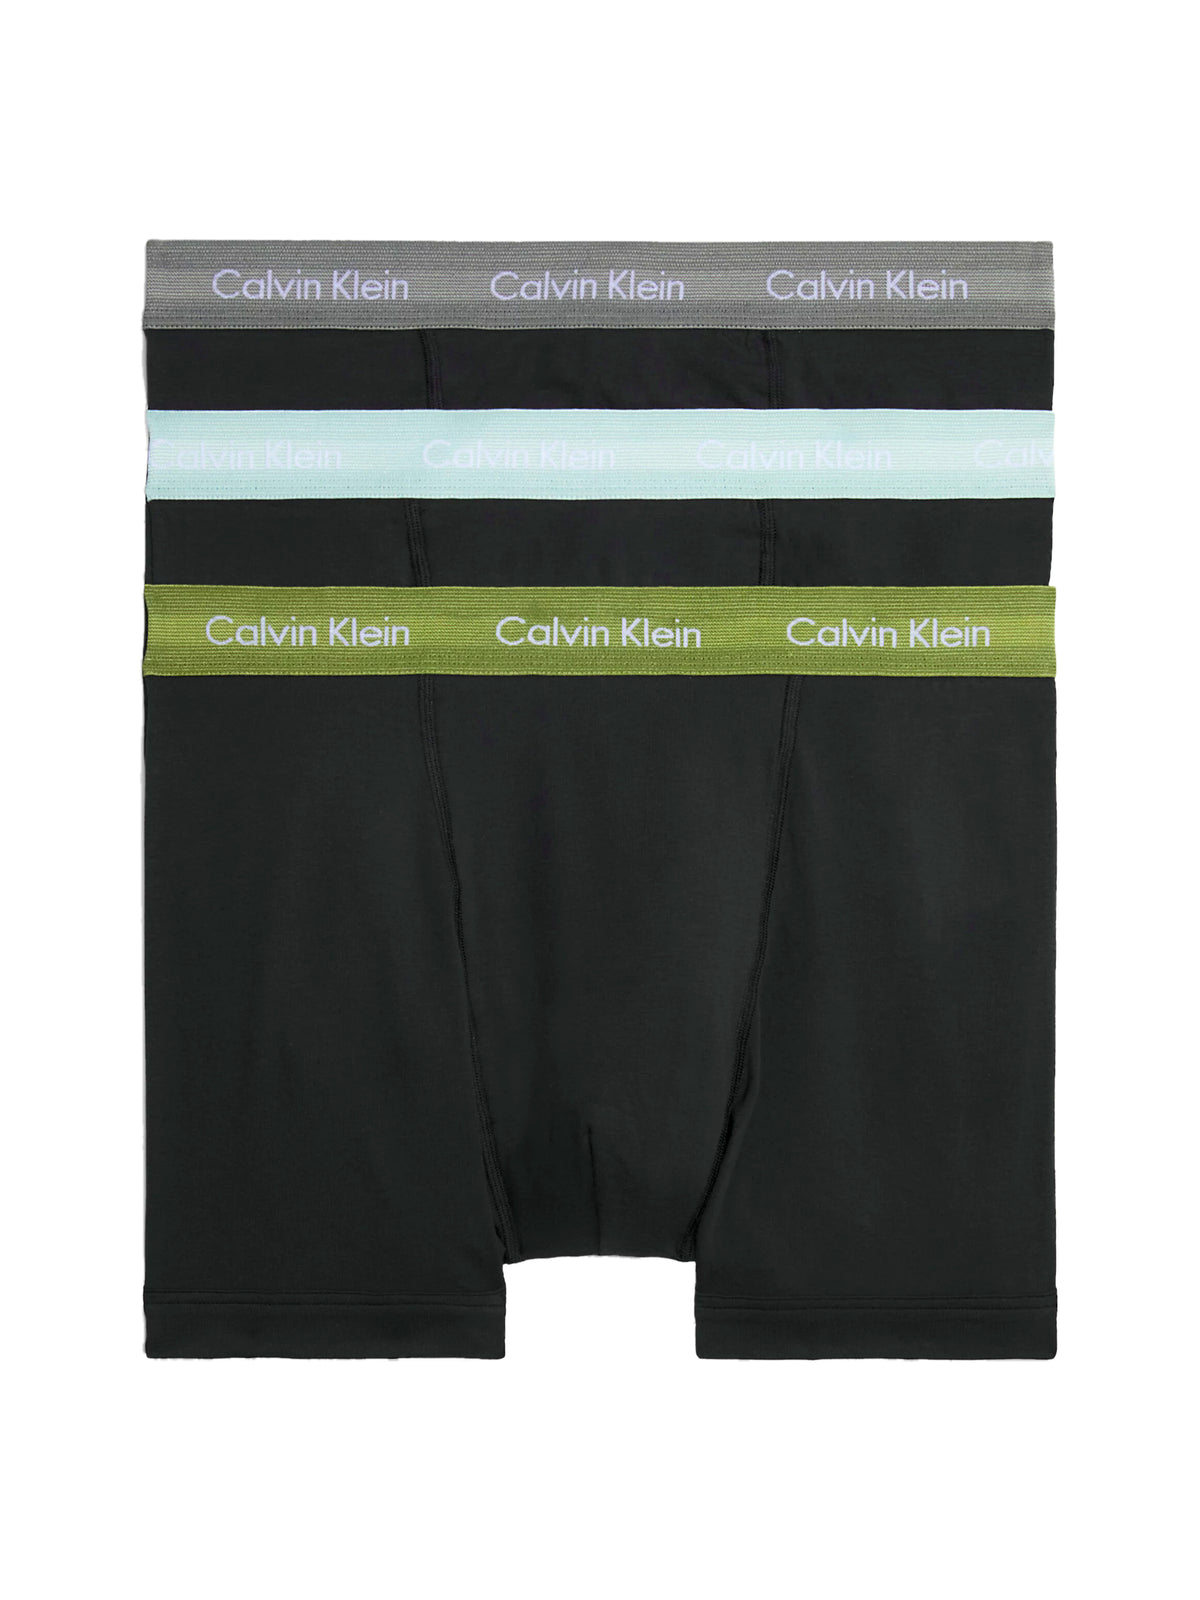 Calvin Klein Mens Classic Stretch Boxer Shorts/ Trunks (3-Pack), 01, U2662G-Ss22, B- W/OLV BRC CROL GRY, GRY MIST WBS